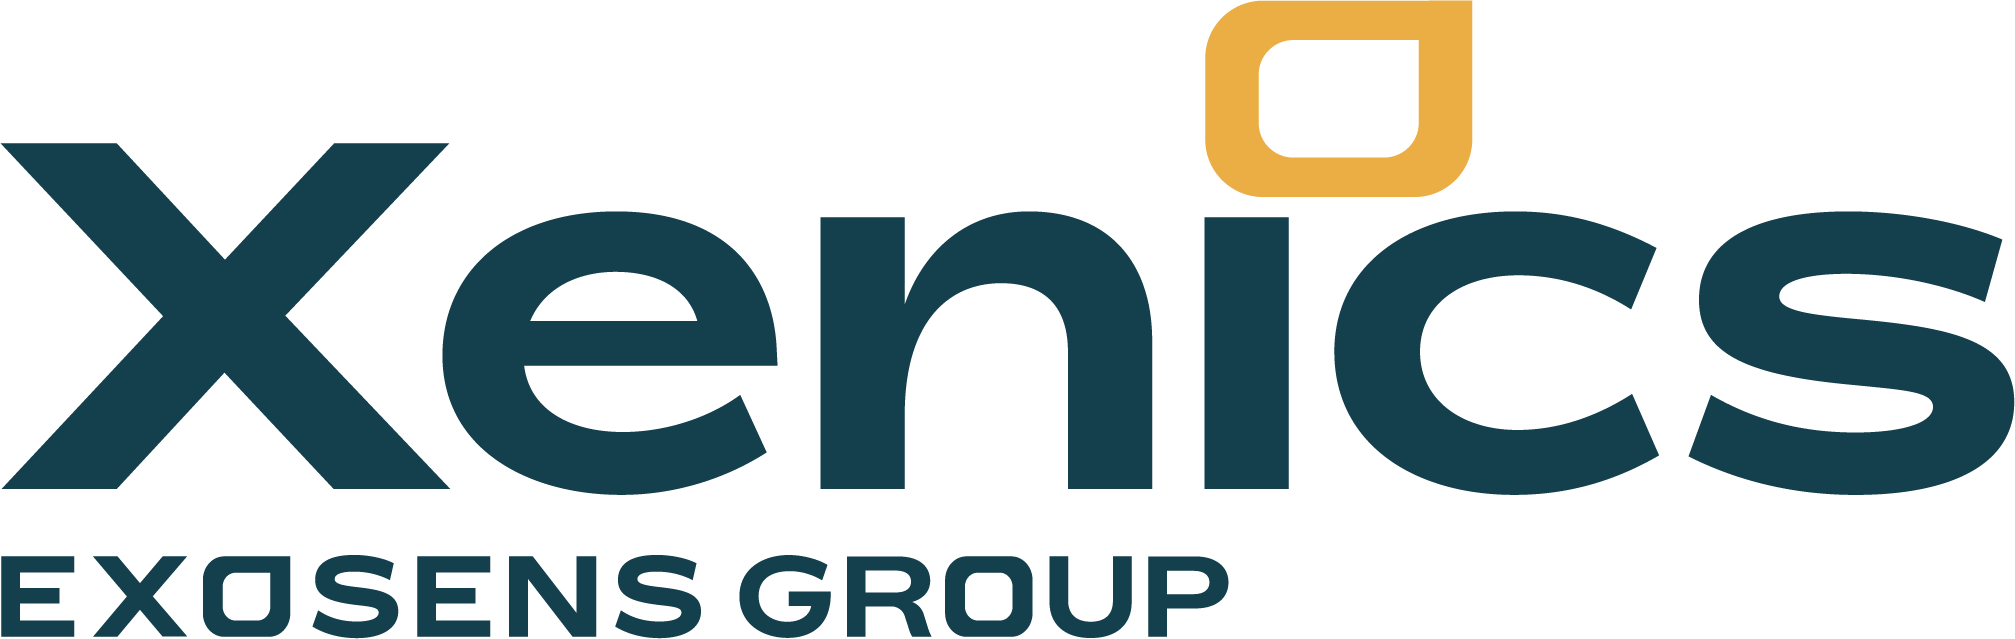 Xenics红外相机官网logo